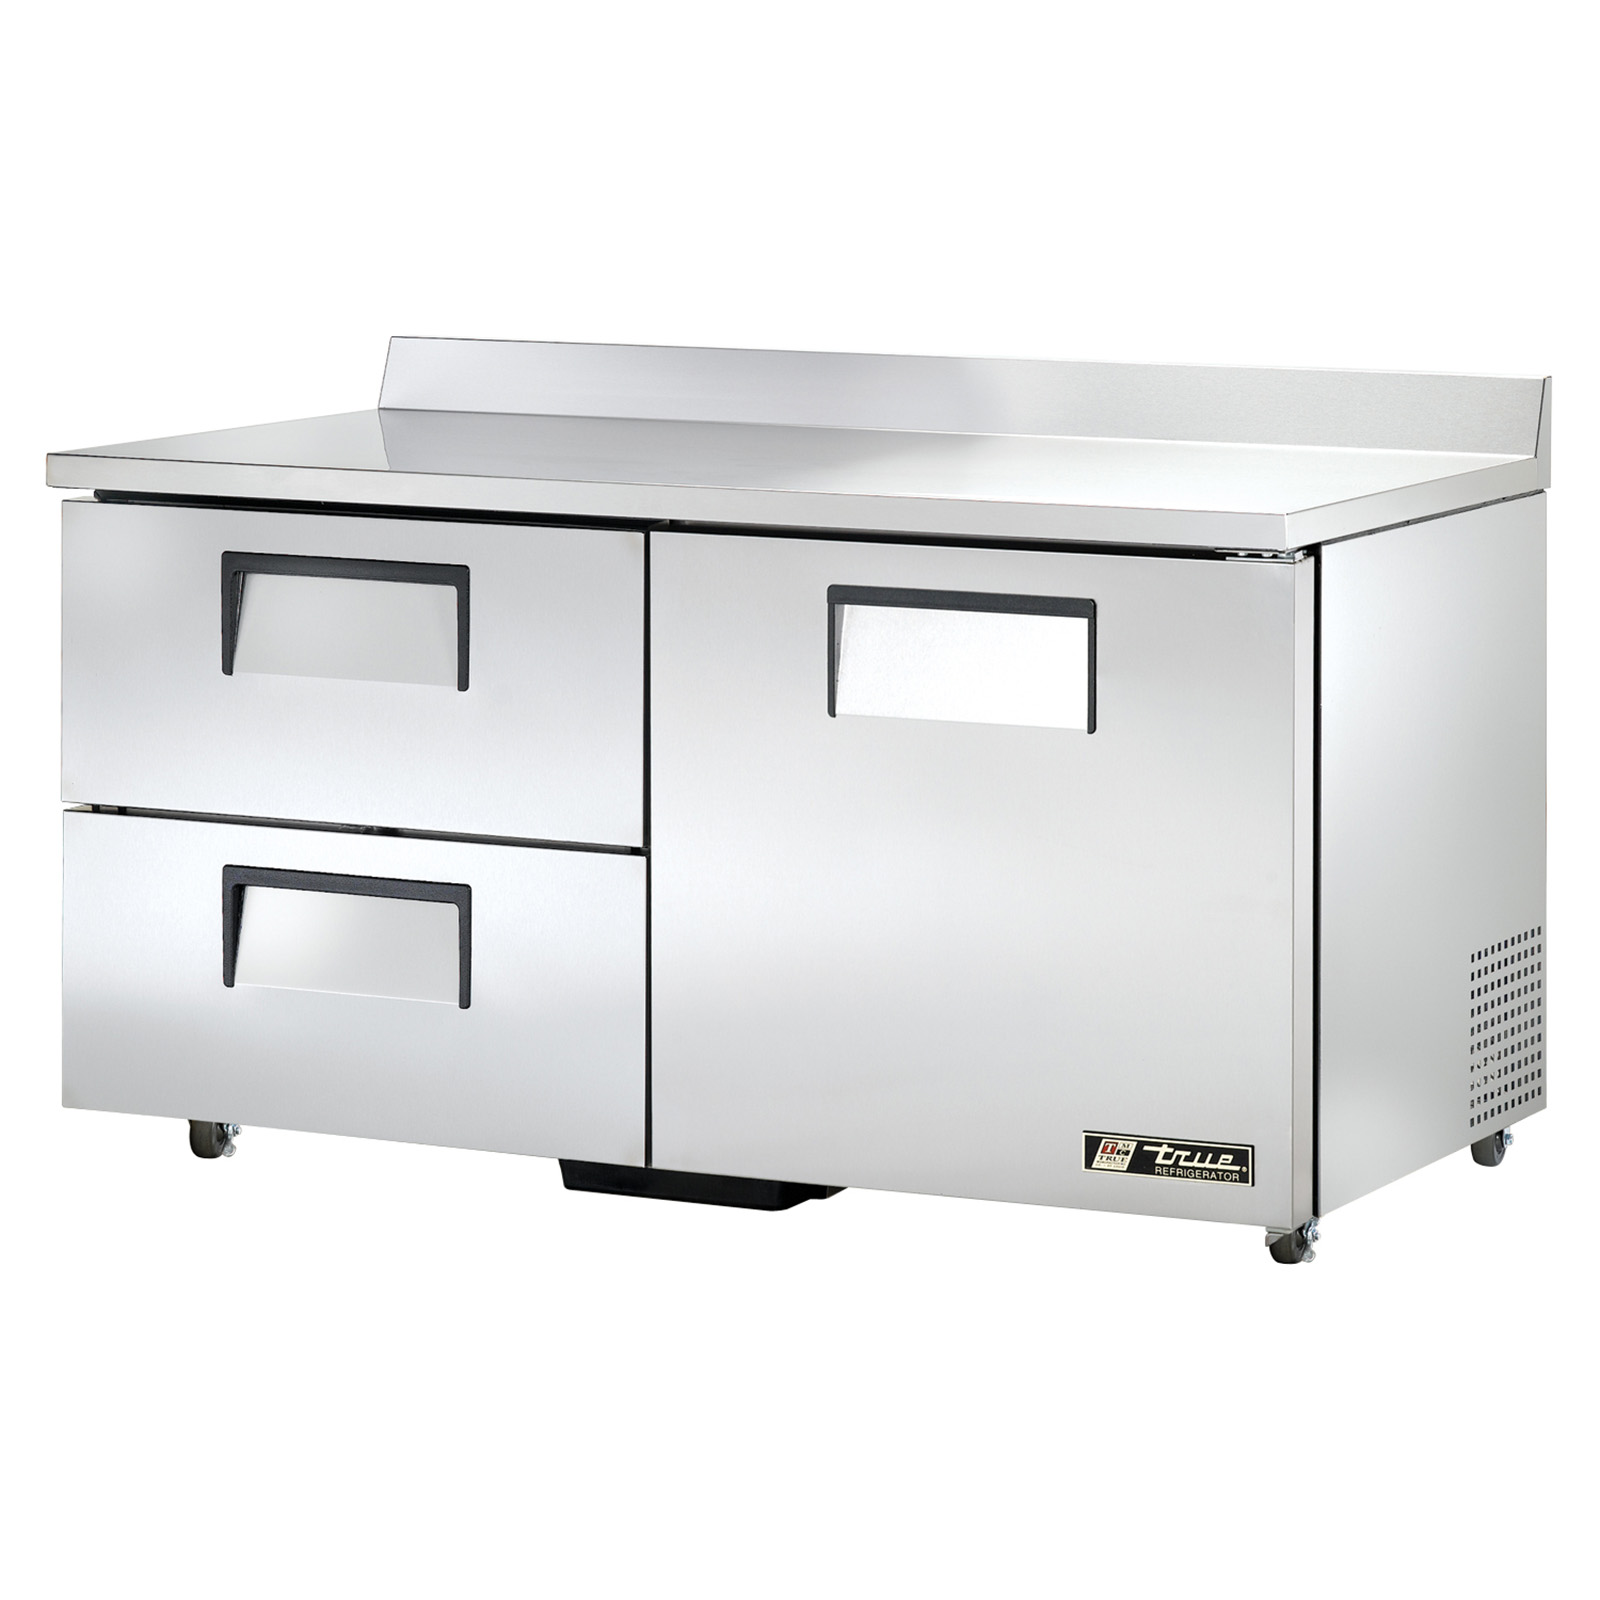 True Food Service Equipment TWT-60D-2-ADA Refrigerated Counter, Work Top